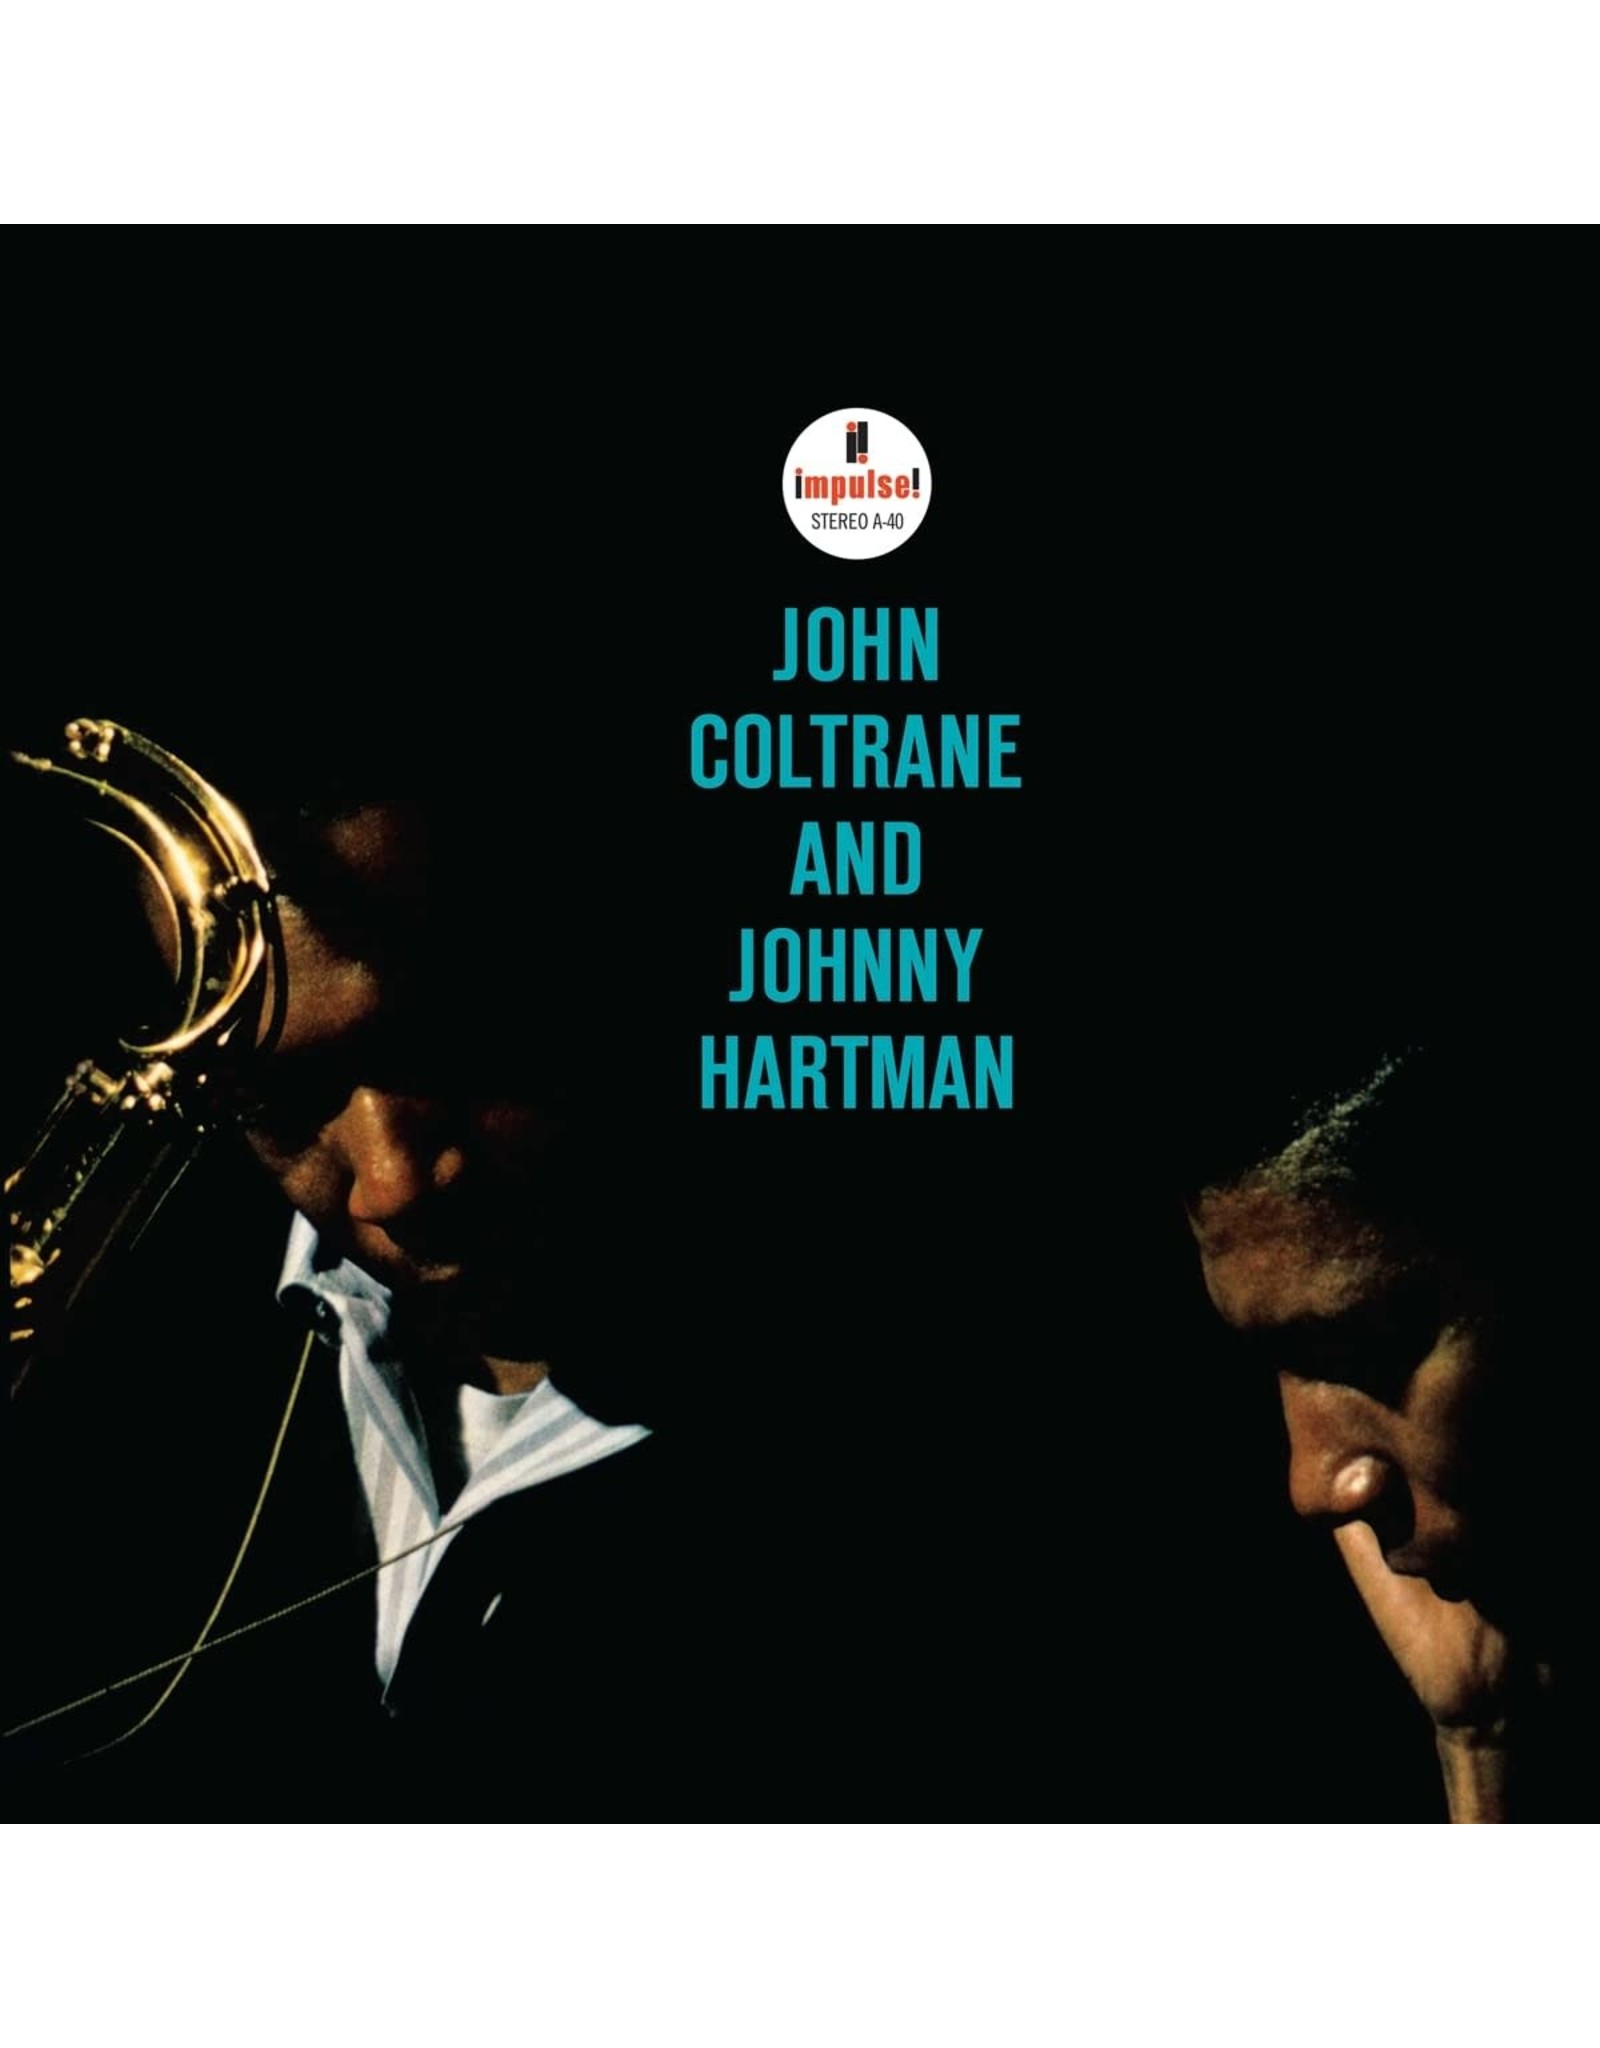 Coltrane, John & Johnny Hartman - John Coltrane And Johnny Hartman LP (180g) Verve Acoustic Sounds Series